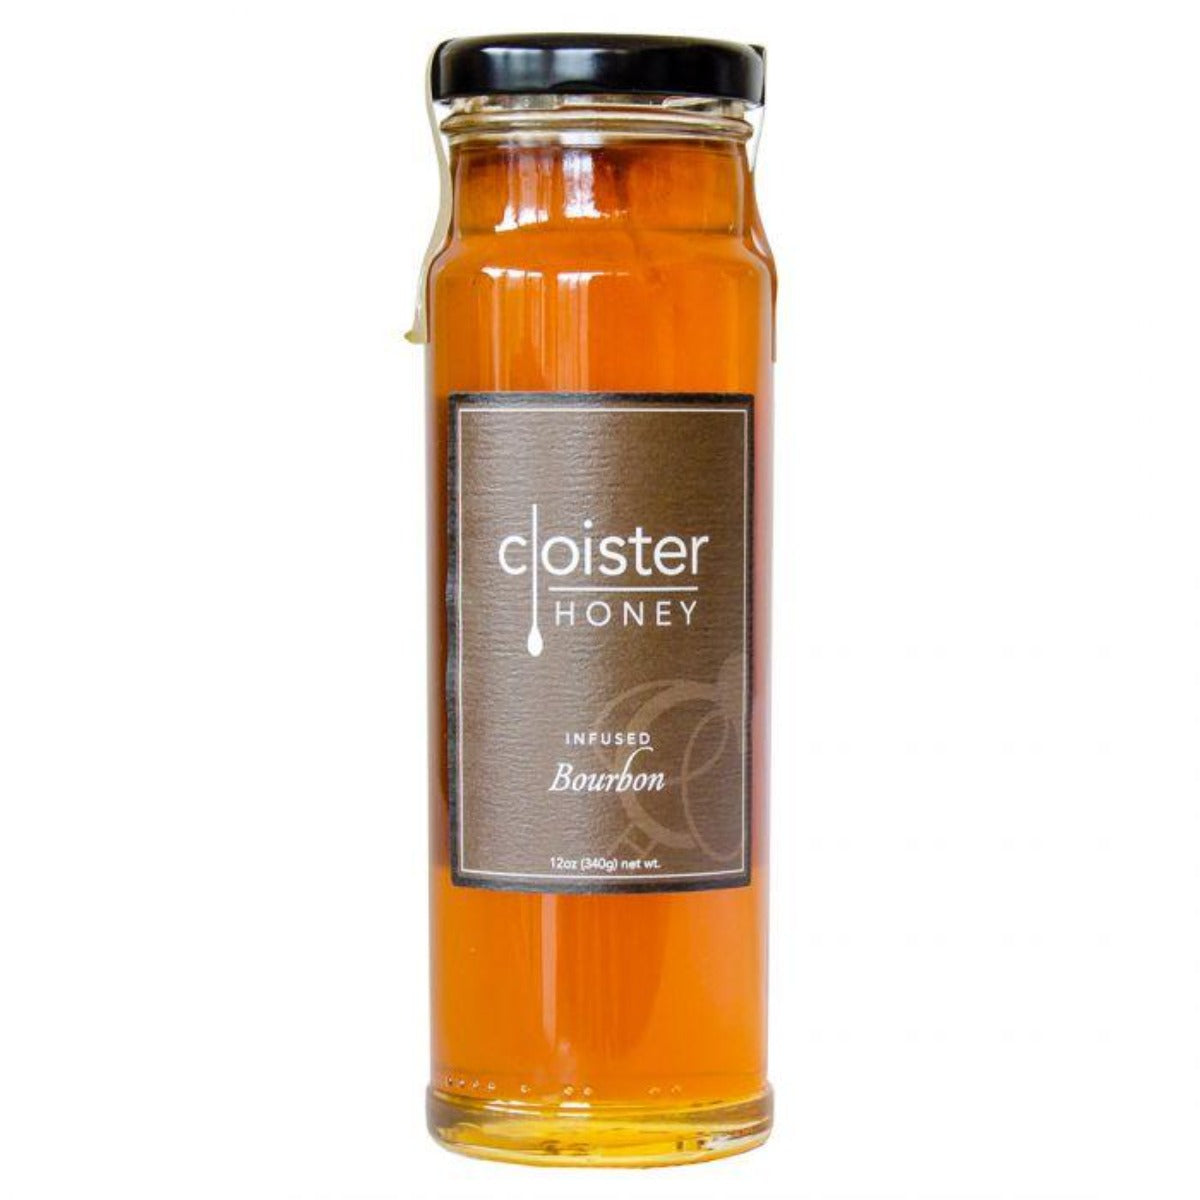 bourbon infused honey cloister